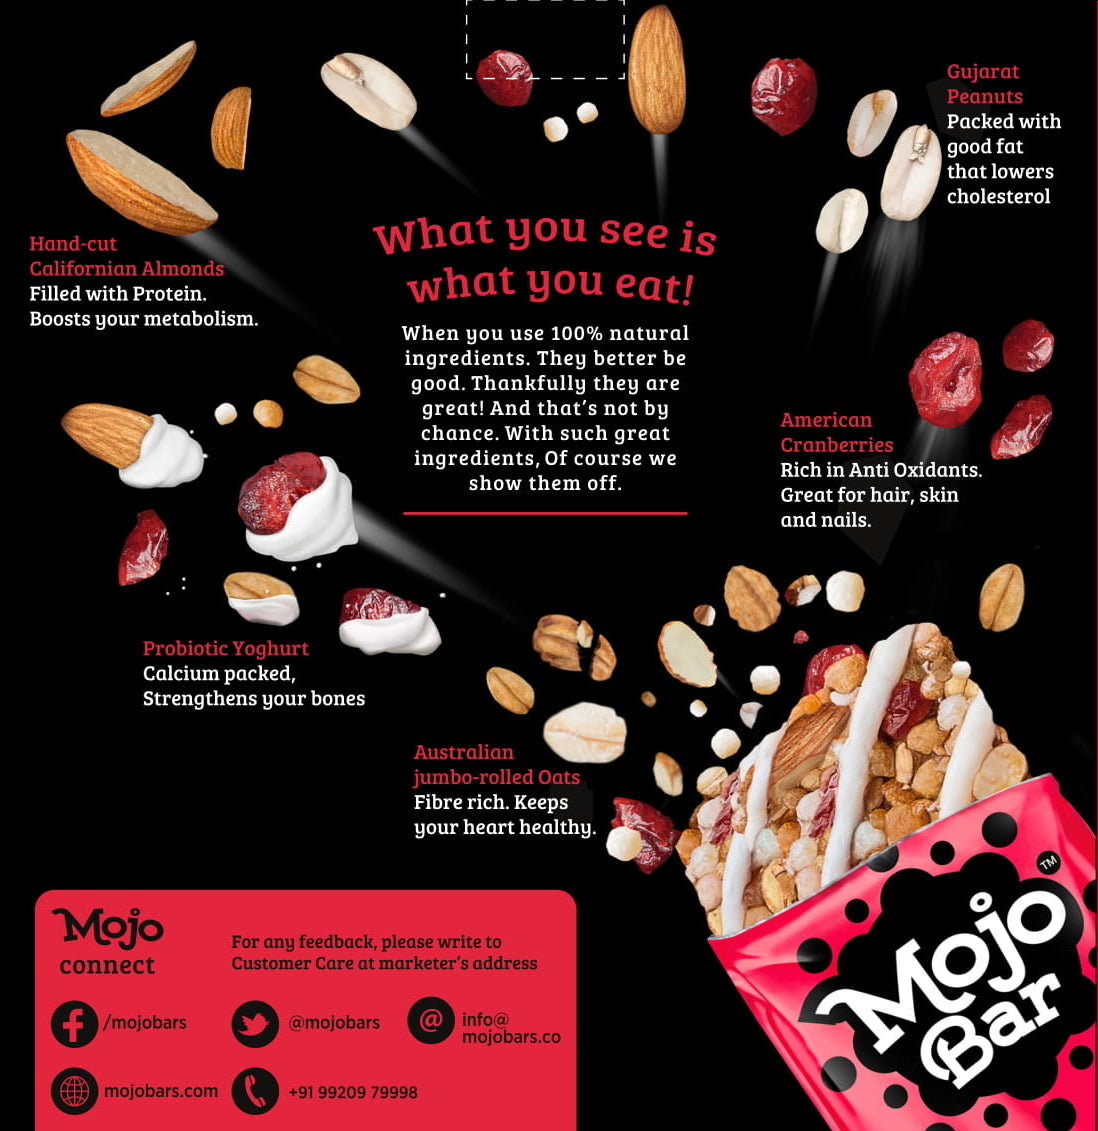 Yoghurt Berry and Anti Oxidants, 192g (Pack of 6) - Mojo Snacks